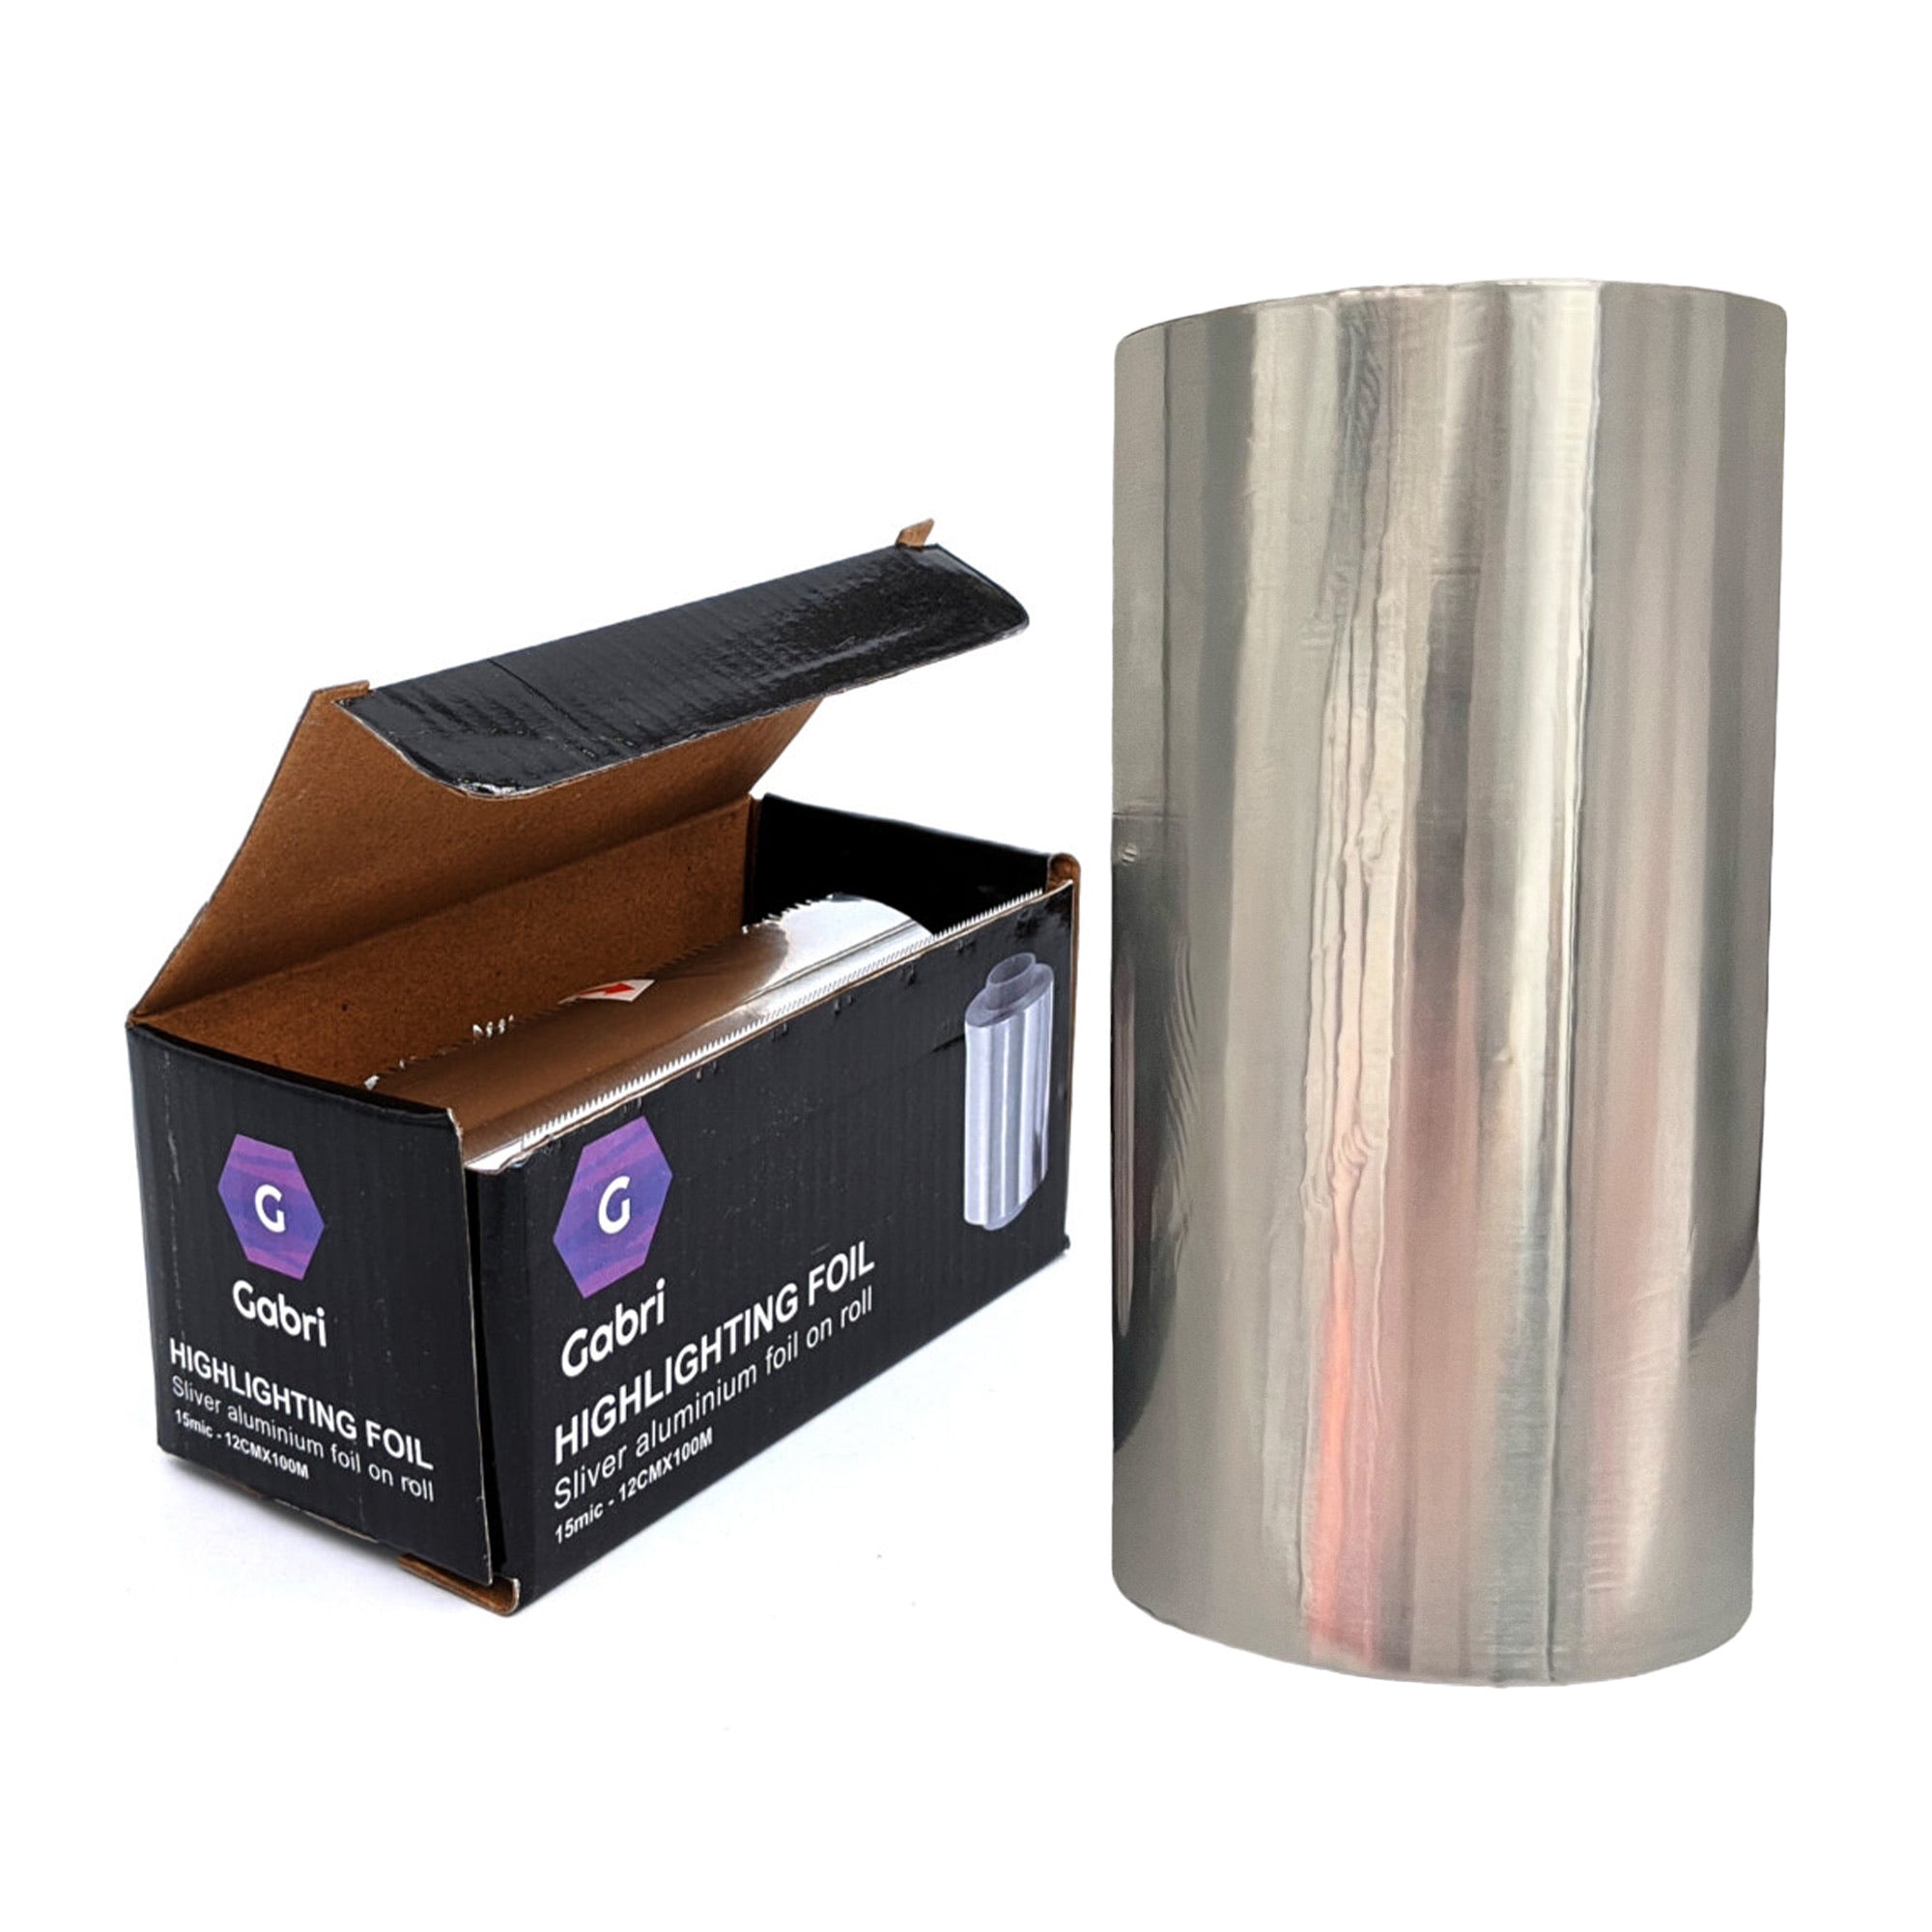 Gabri - Highlighting Foil Silver Aluminium Foil On Roll 12x100cm